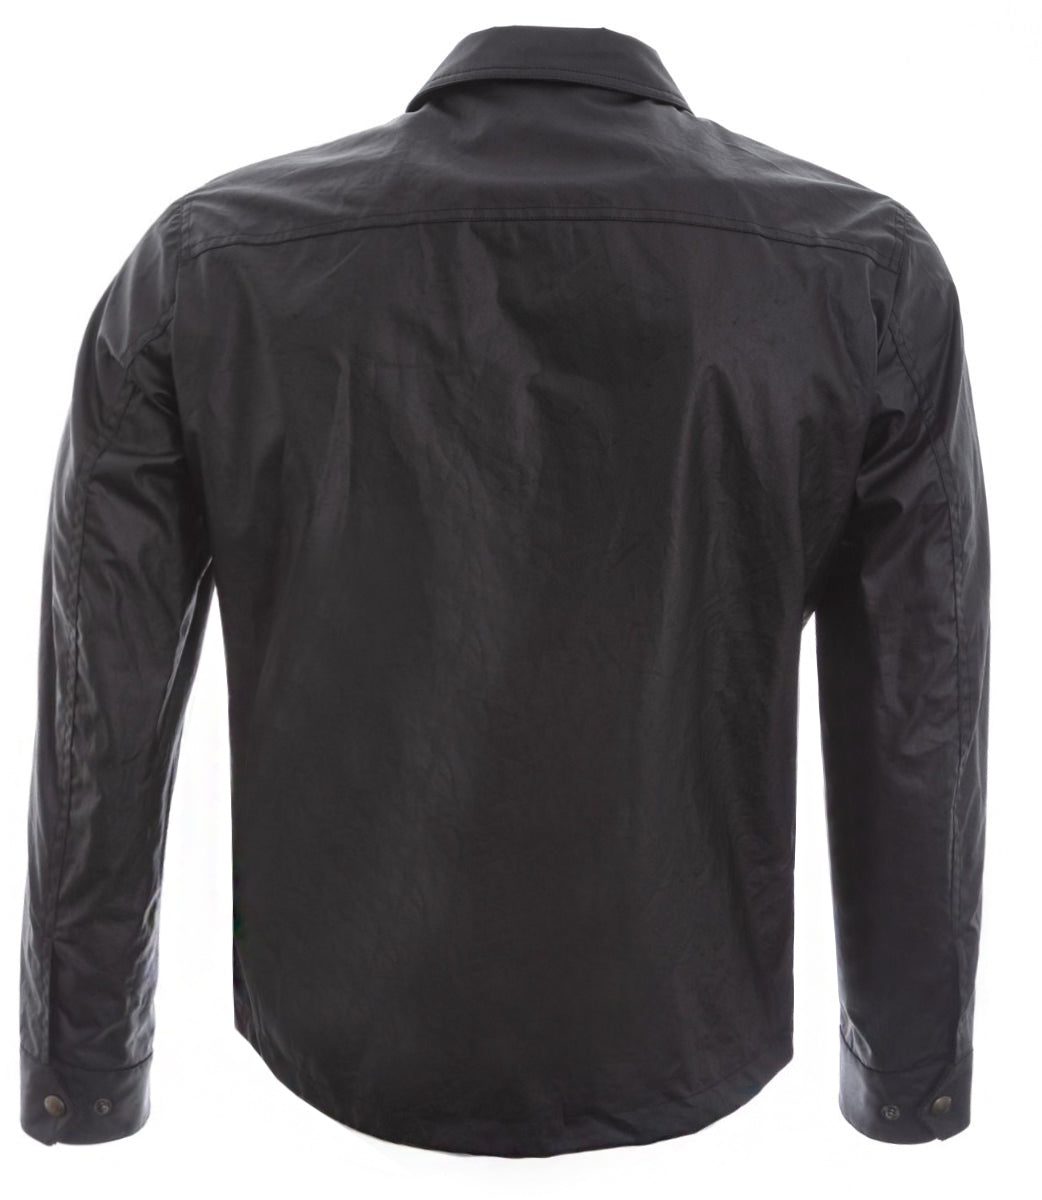 Belstaff Dunstall Jacket in Black Back